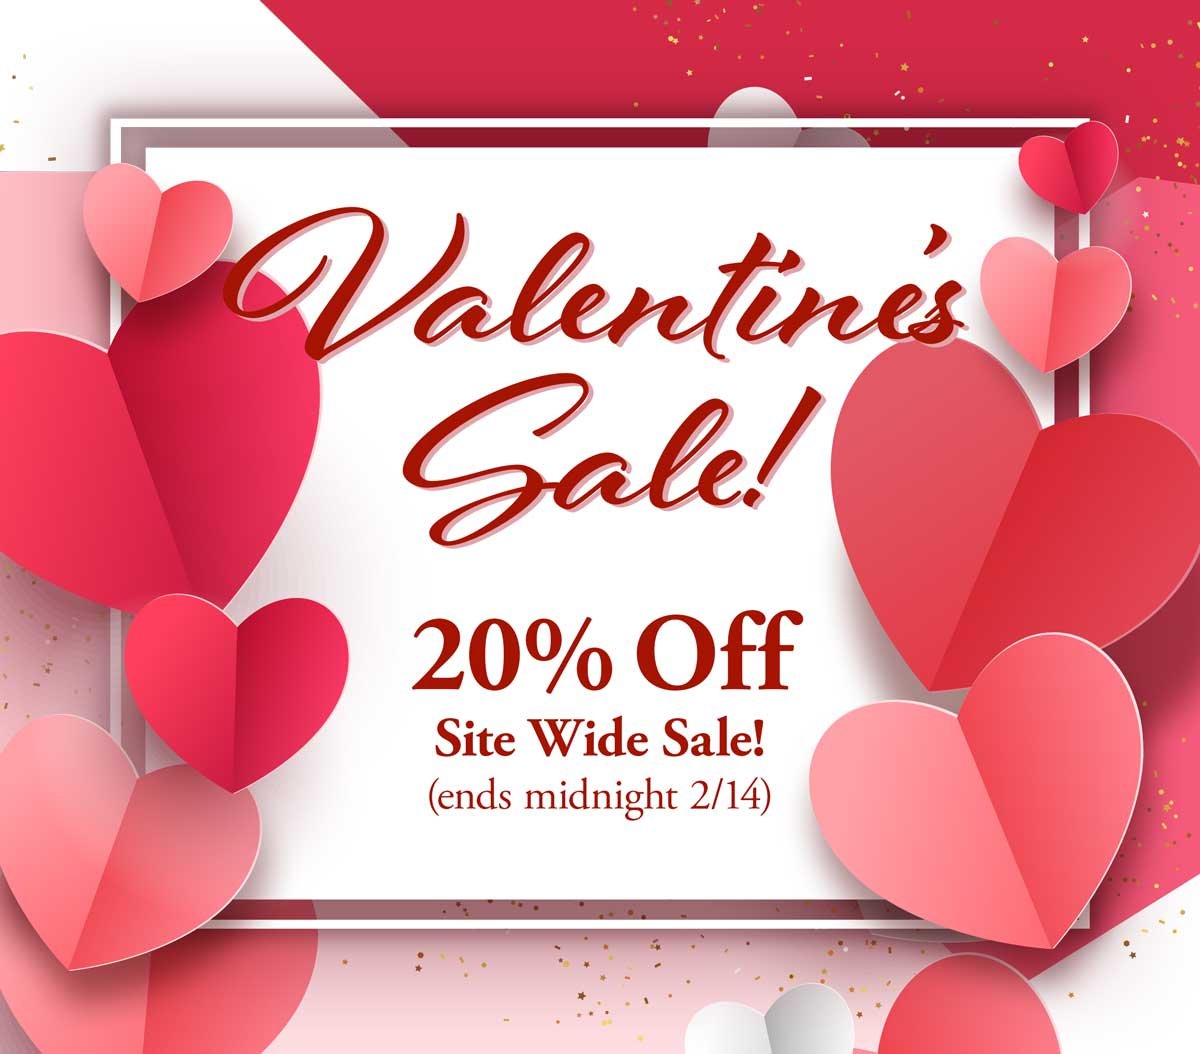 Valentines-day-sale-20-percent-off-2024.jpg